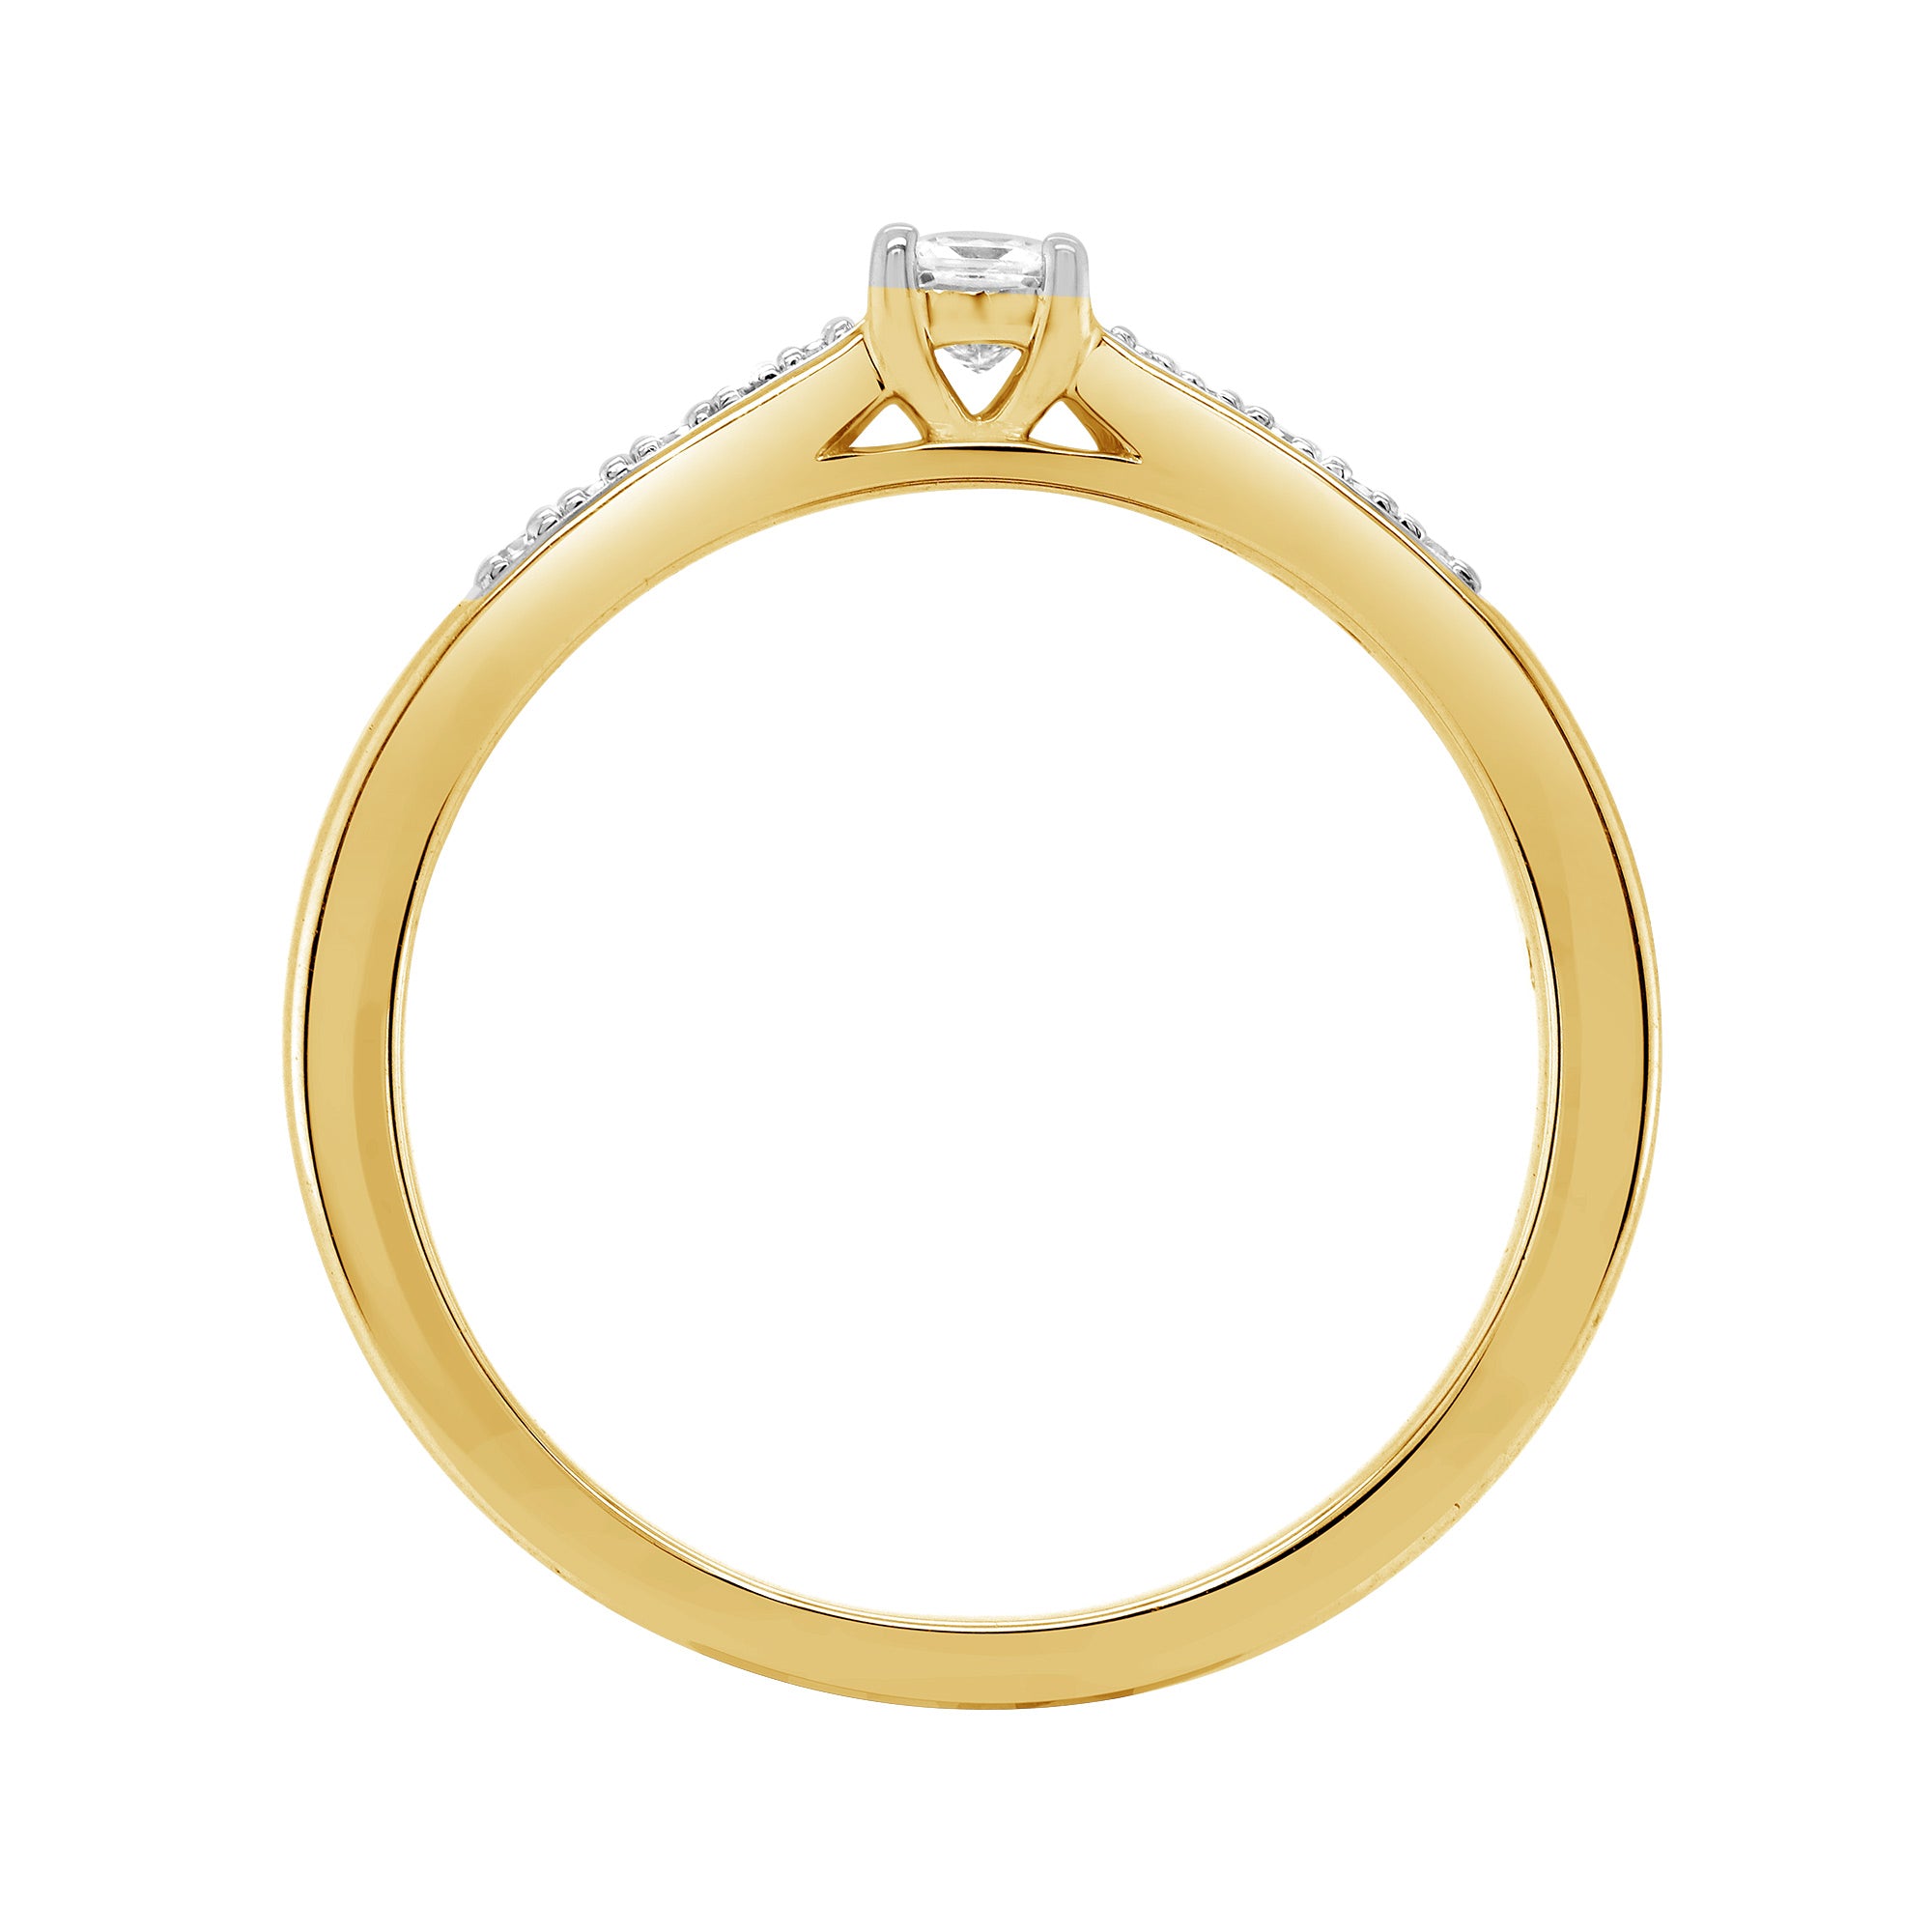 9ct gold princess cut single stone diamond ring with diamond set shoulders 0.21ct